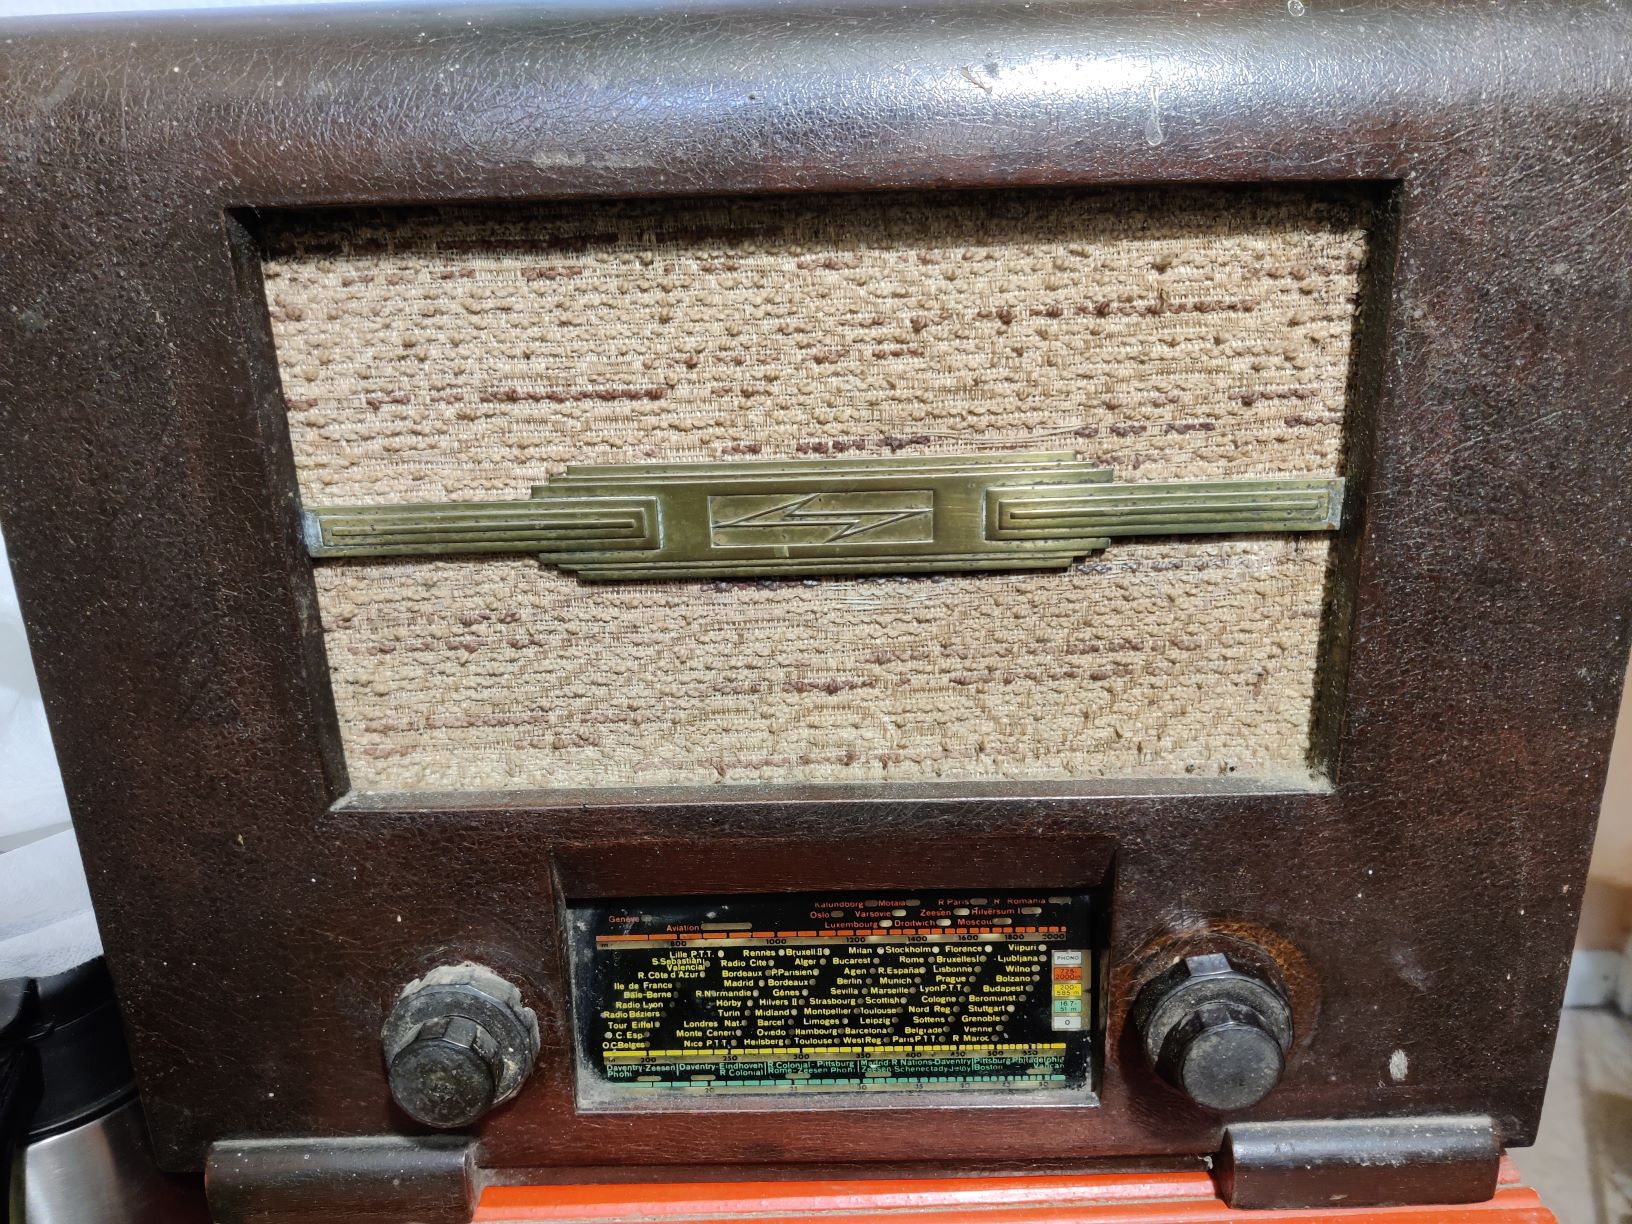 radio.jpg